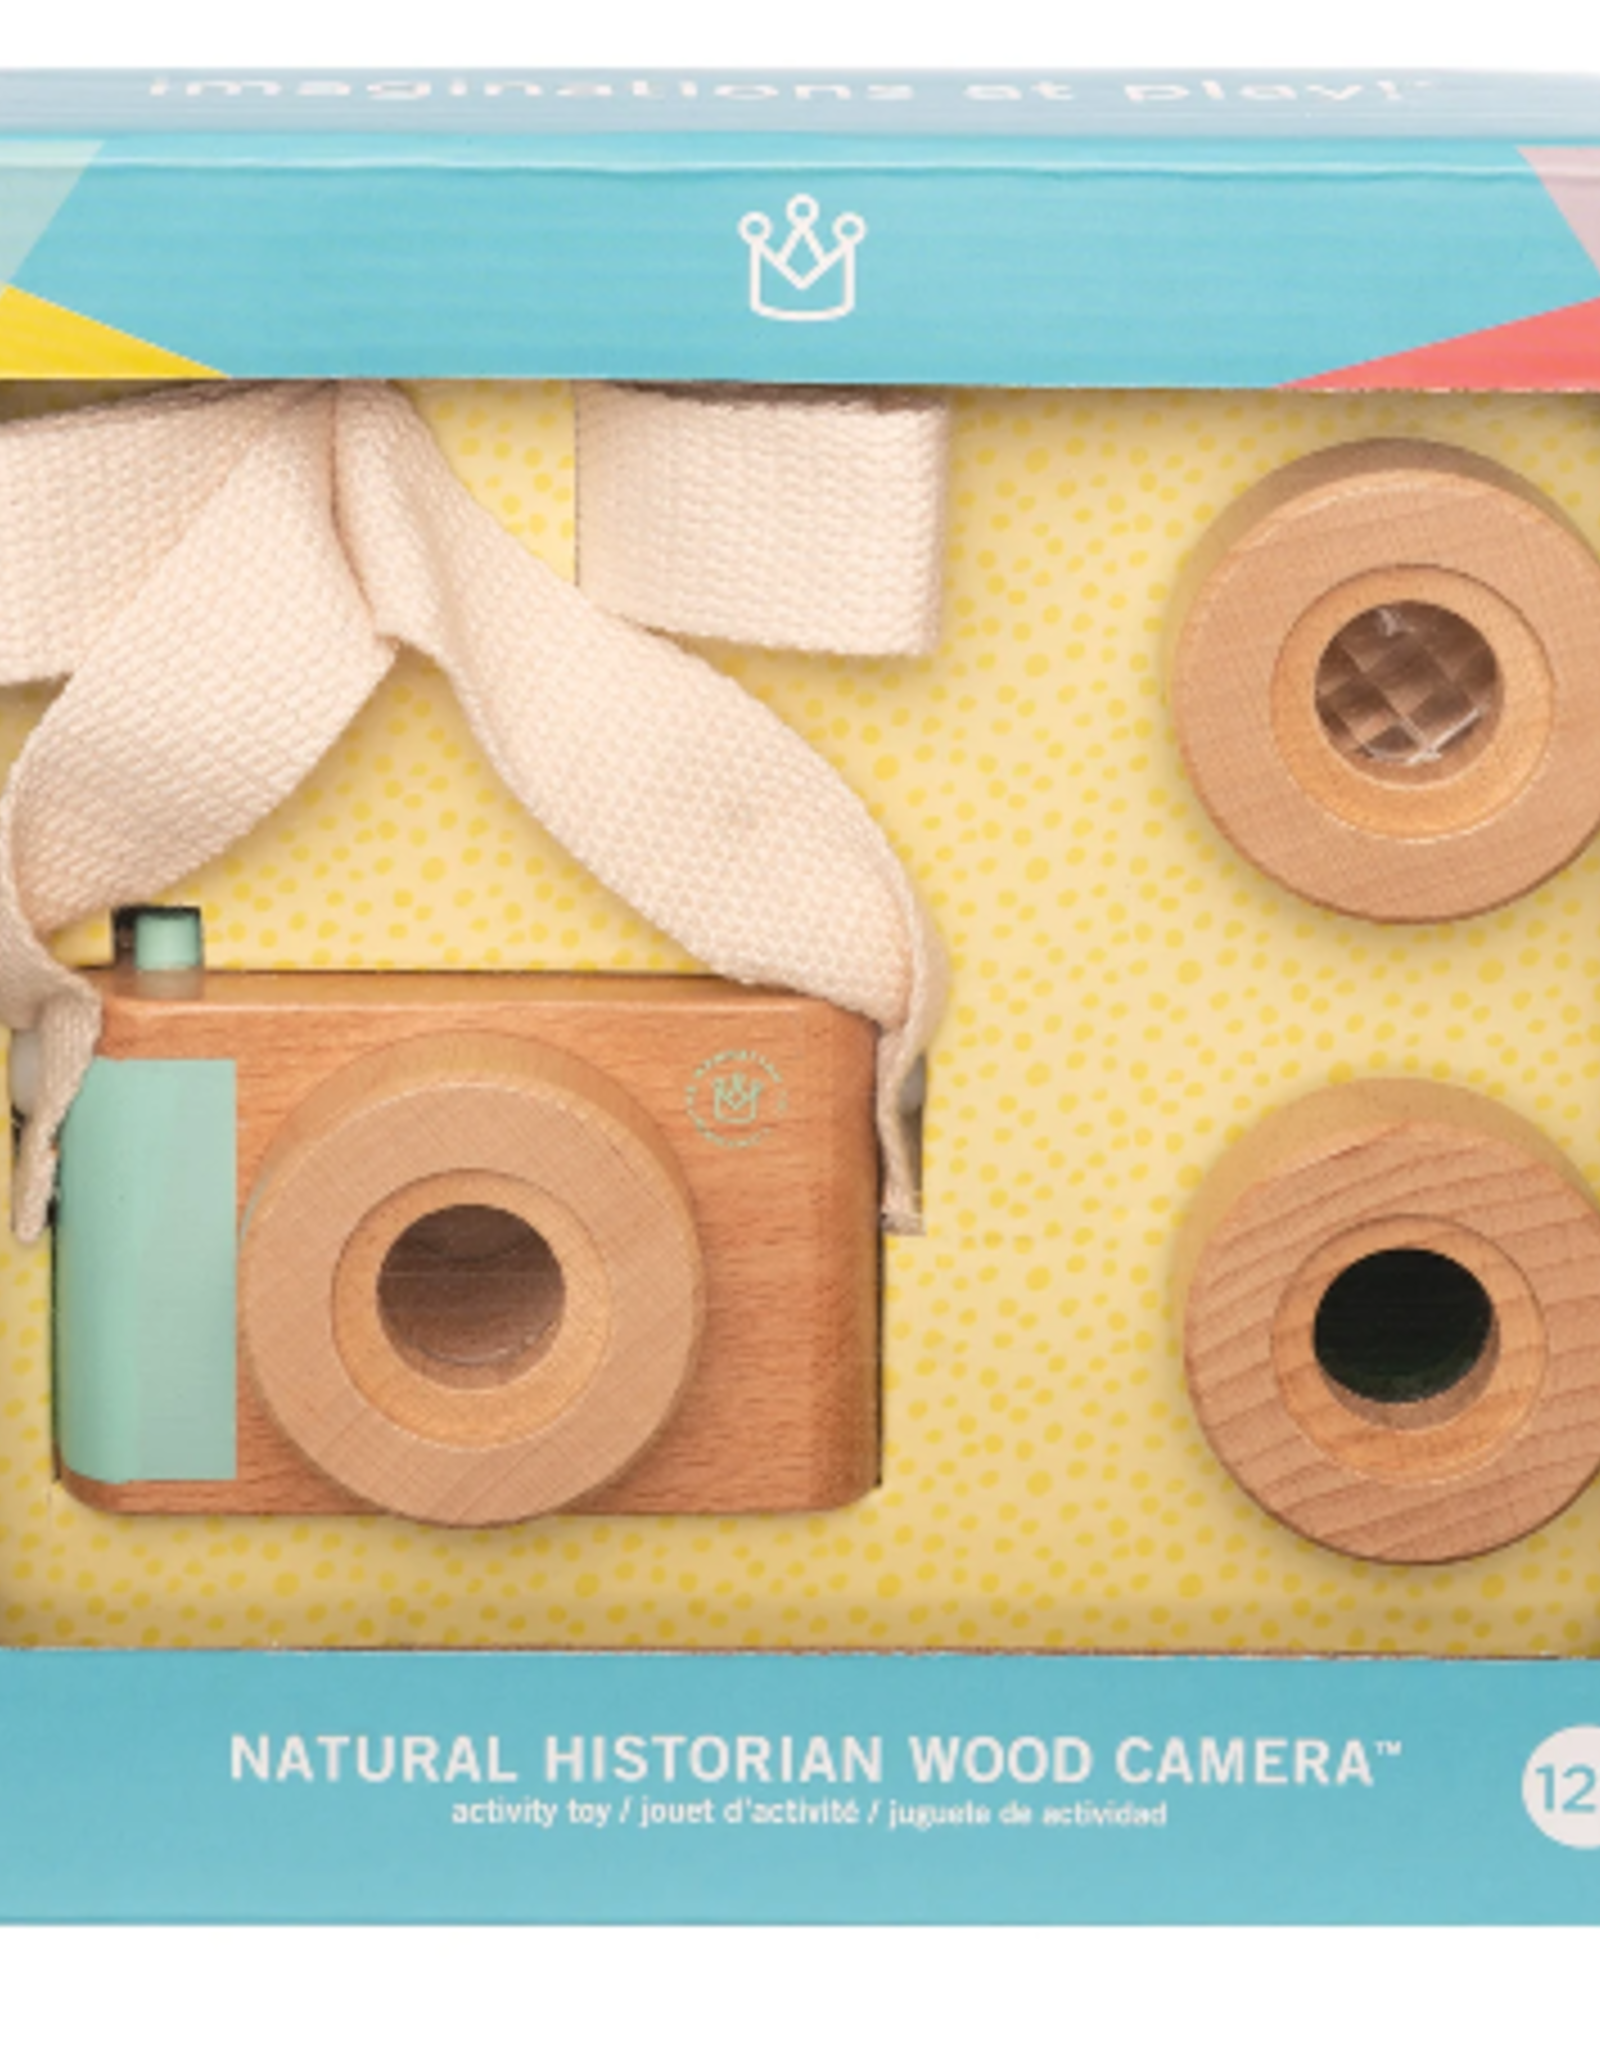 The Manhattan Toy Company Natural Historian Camera